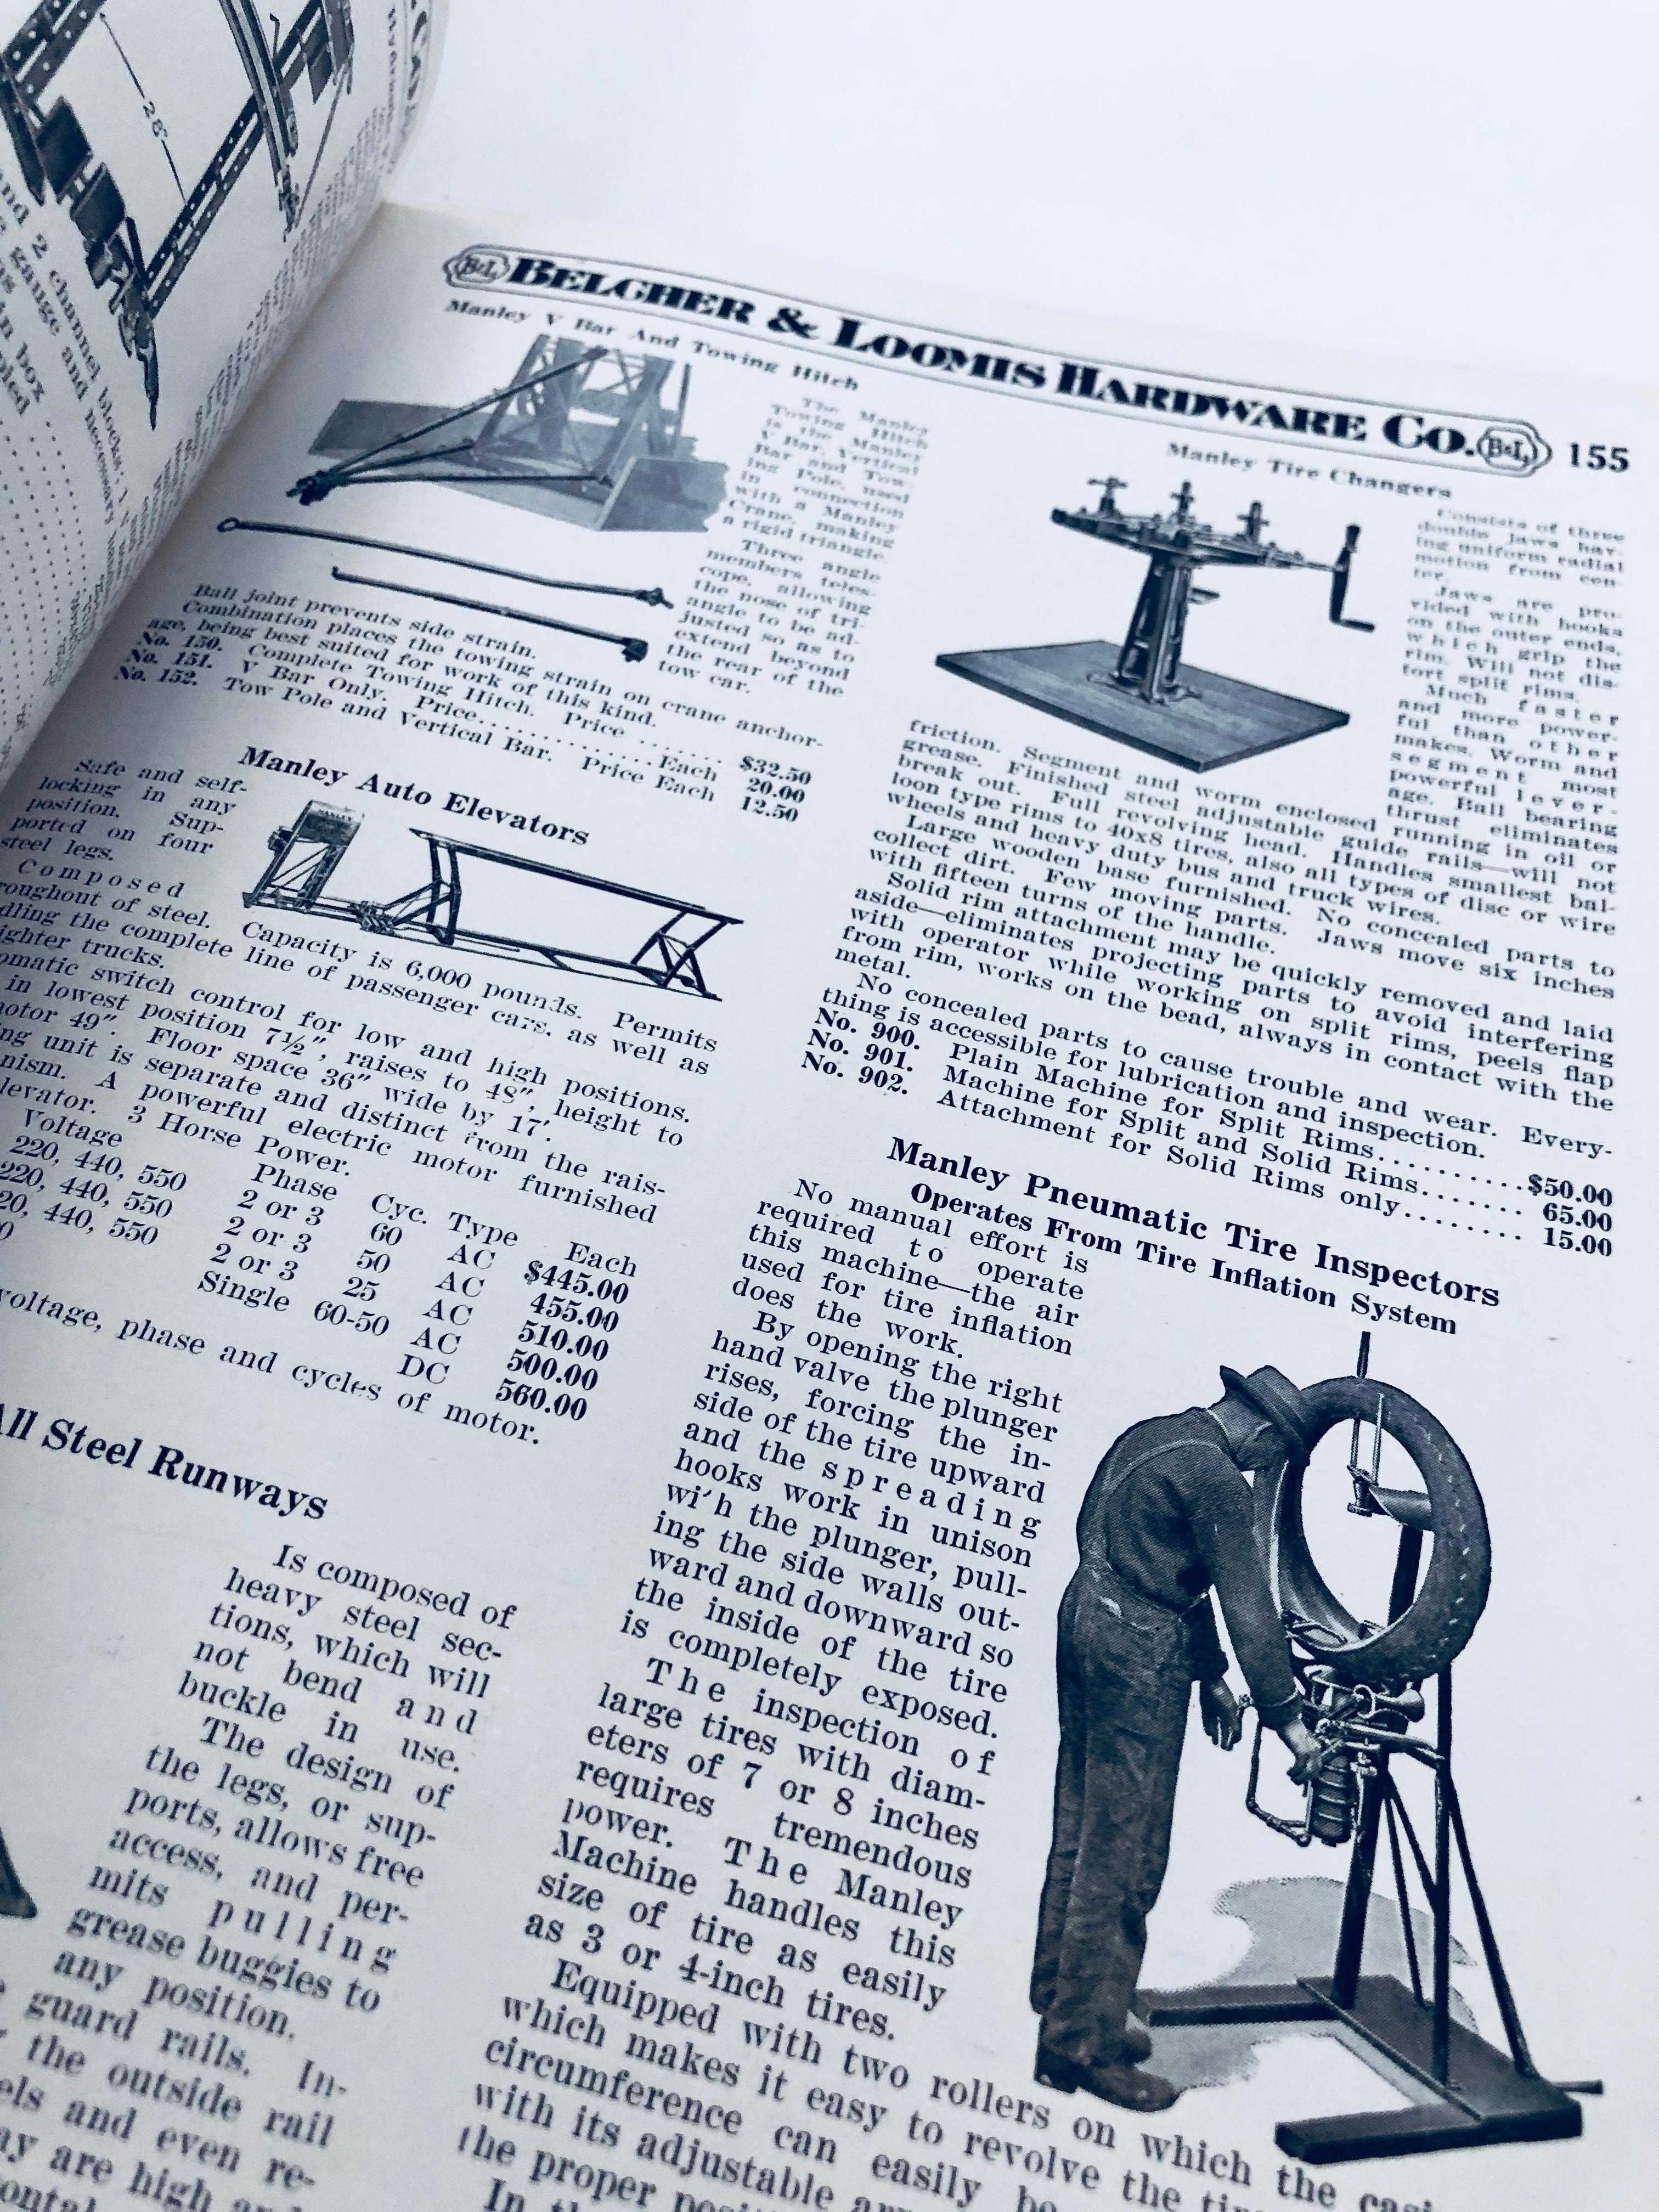 RARE Belcher & Loomis Hardware Co. (c.1930) CATALOG - HARDCOVER Illustrated Providence RI